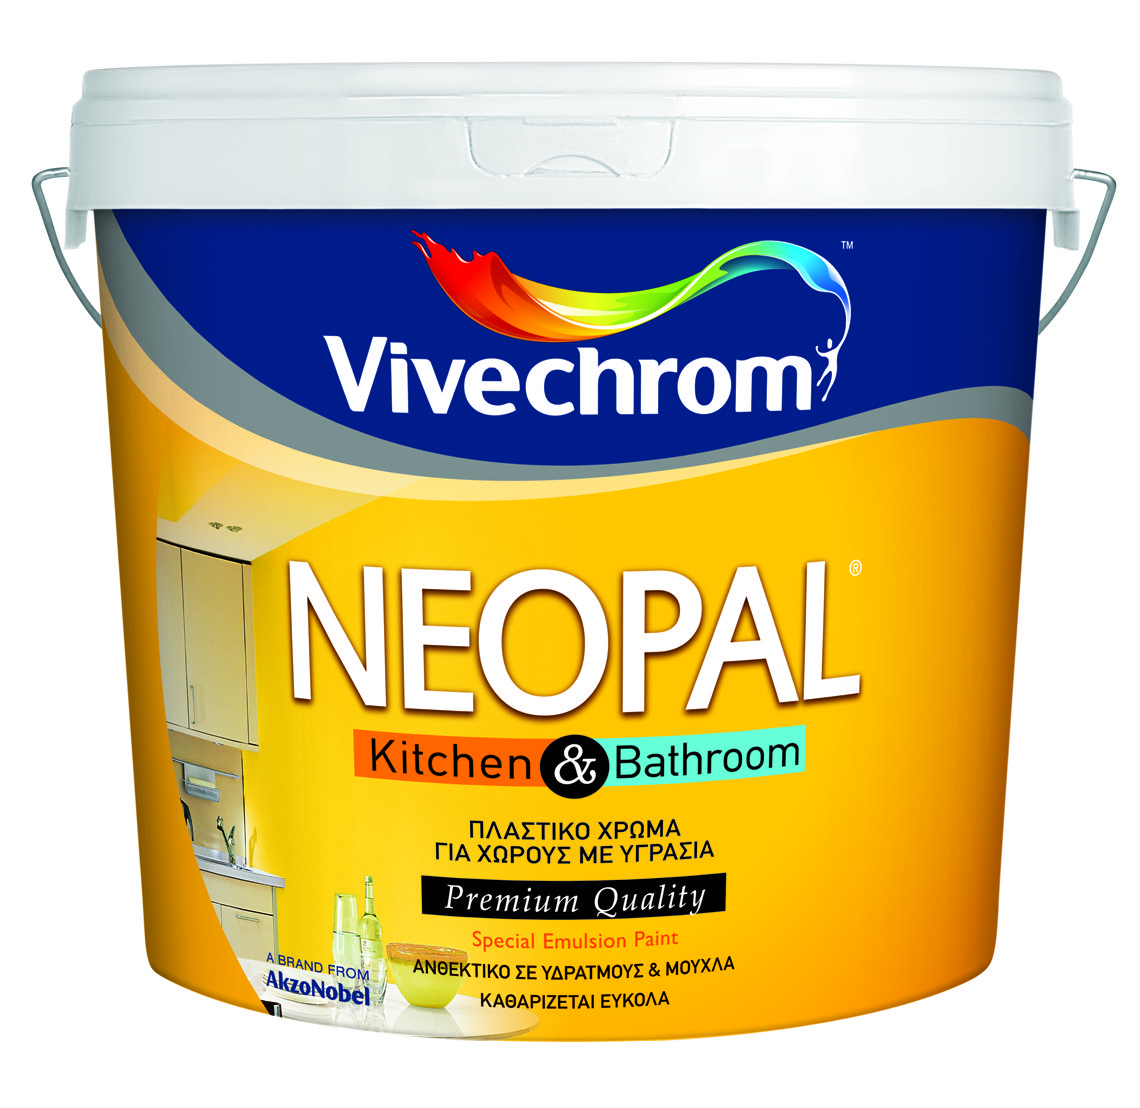 Vivechrom Neopal Kitchen & Bathroom Αντιμικροβιακό Χρώμα για Χώρους με Υγρασία Βάση D 10L